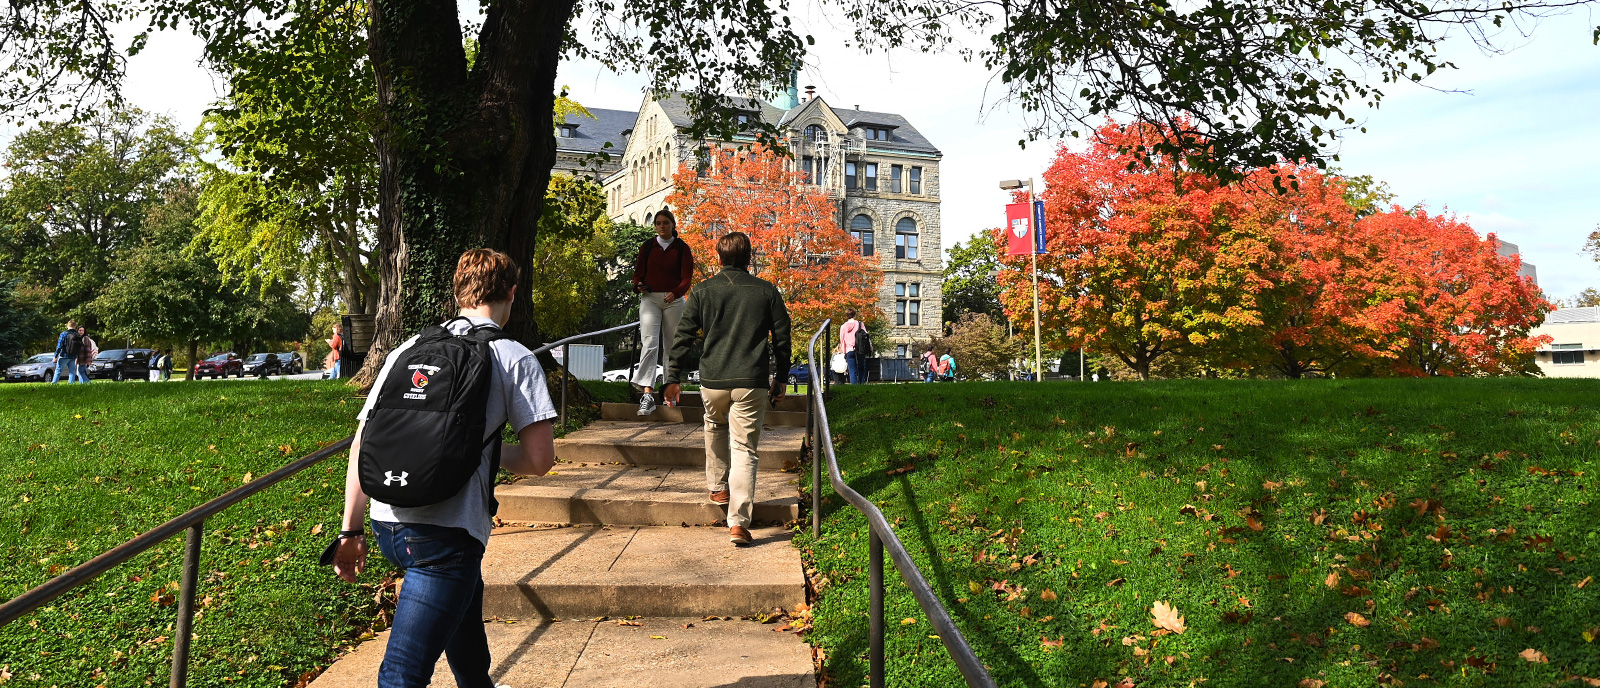 Students walking into fall foliage